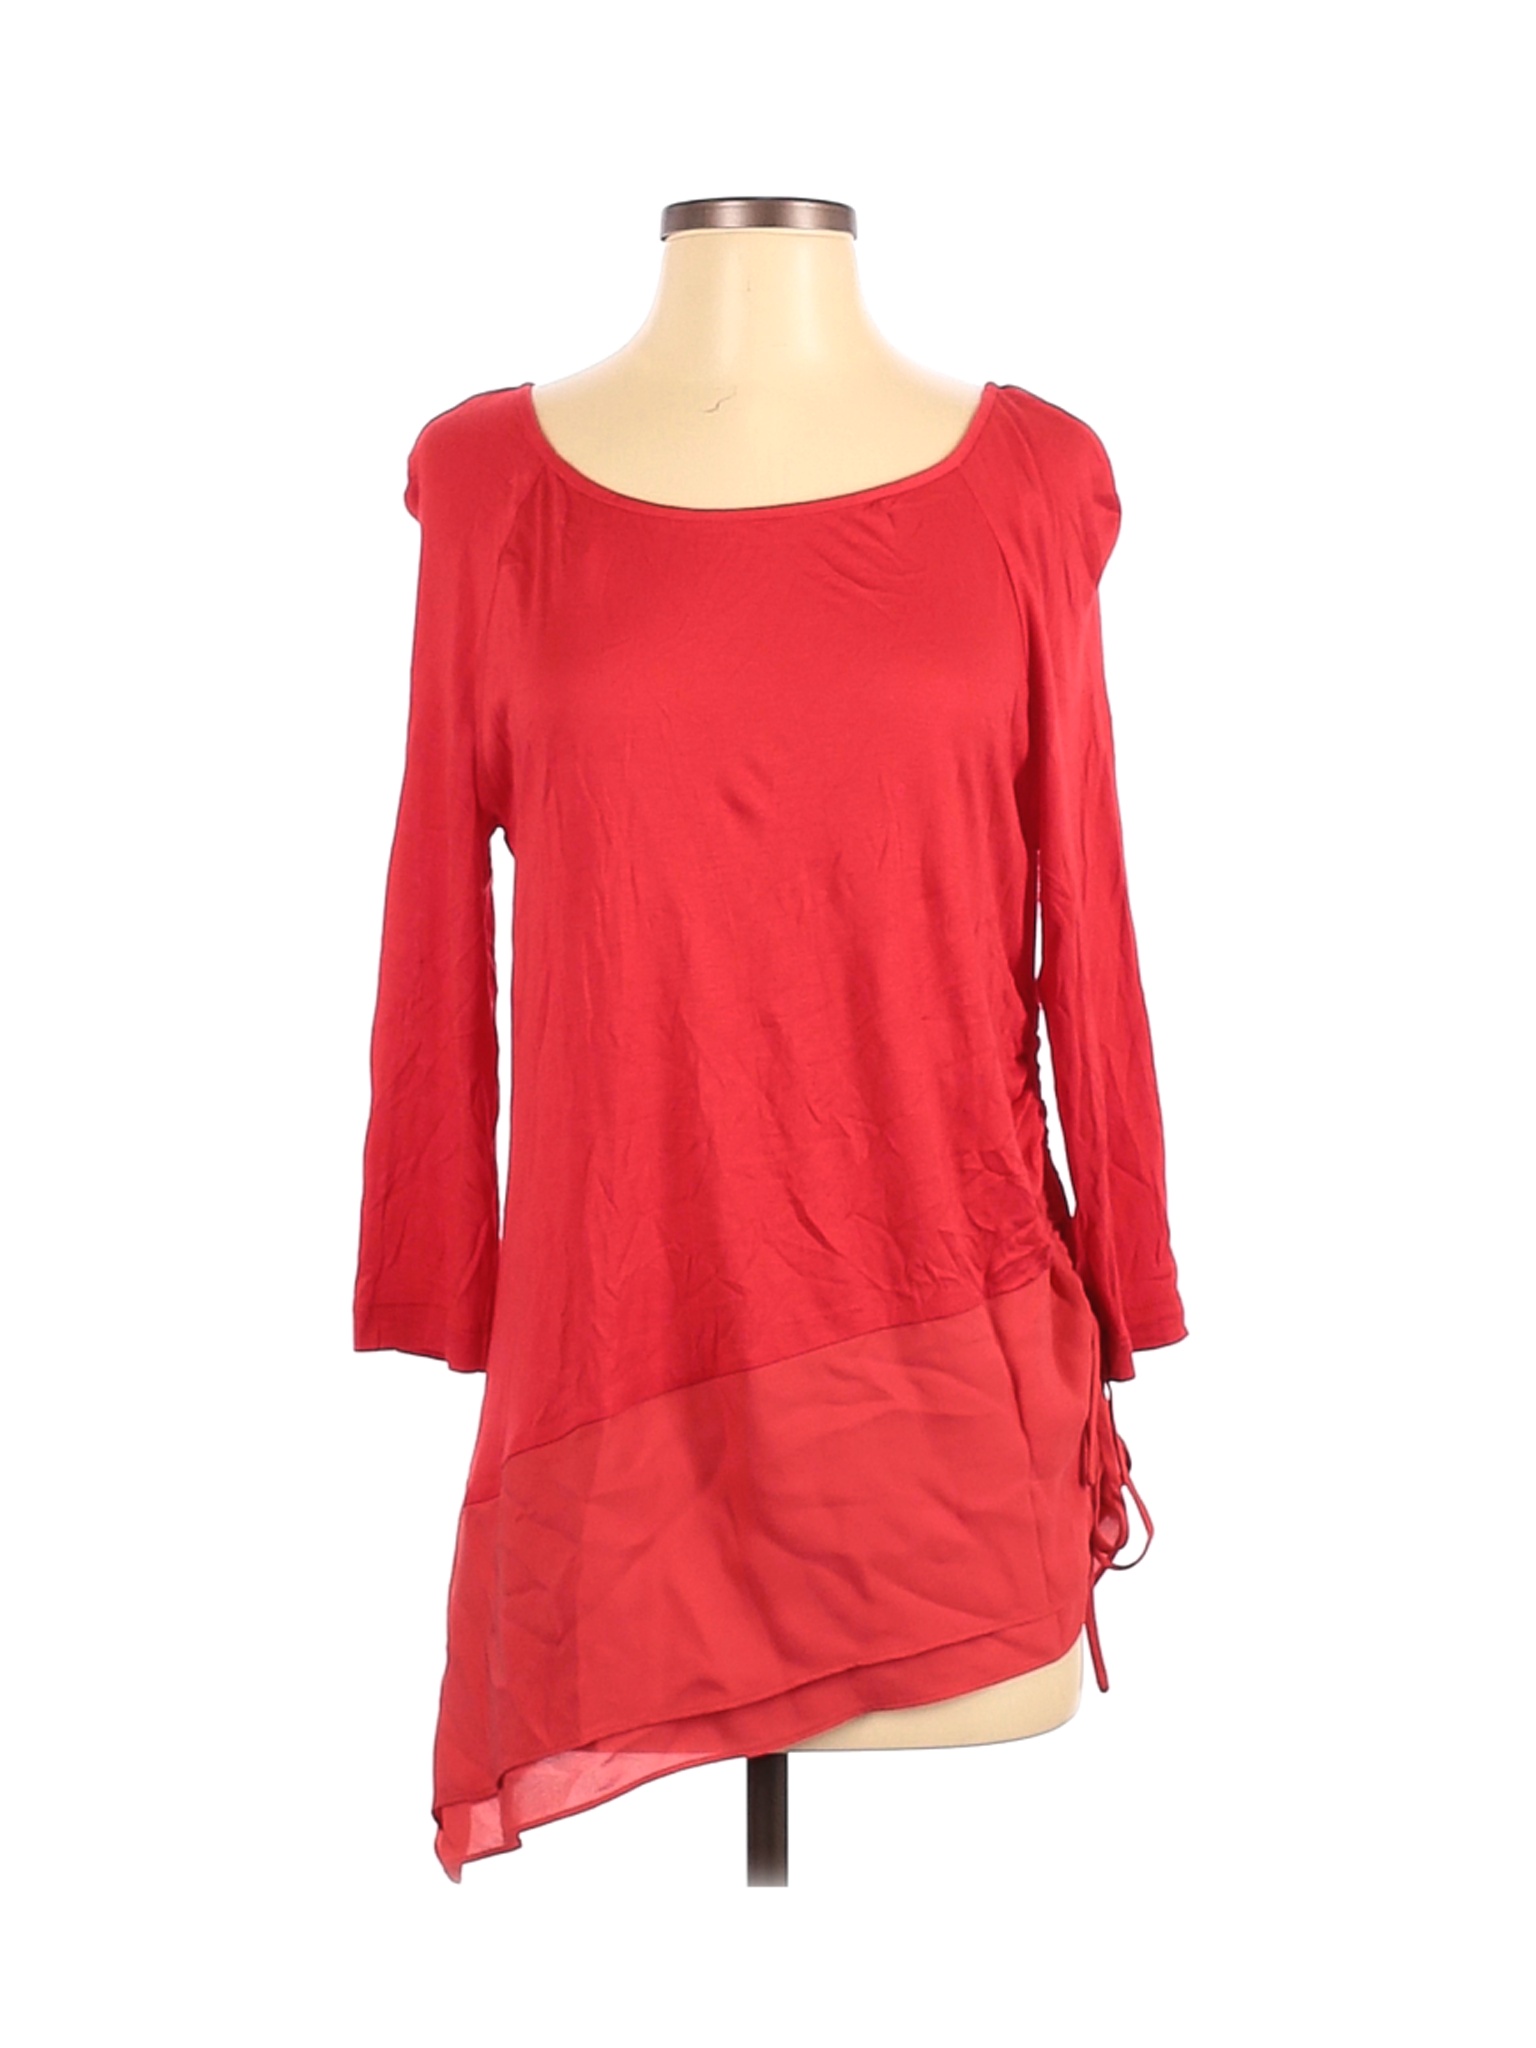 NWT St. John Women Red 3/4 Sleeve Top S | eBay